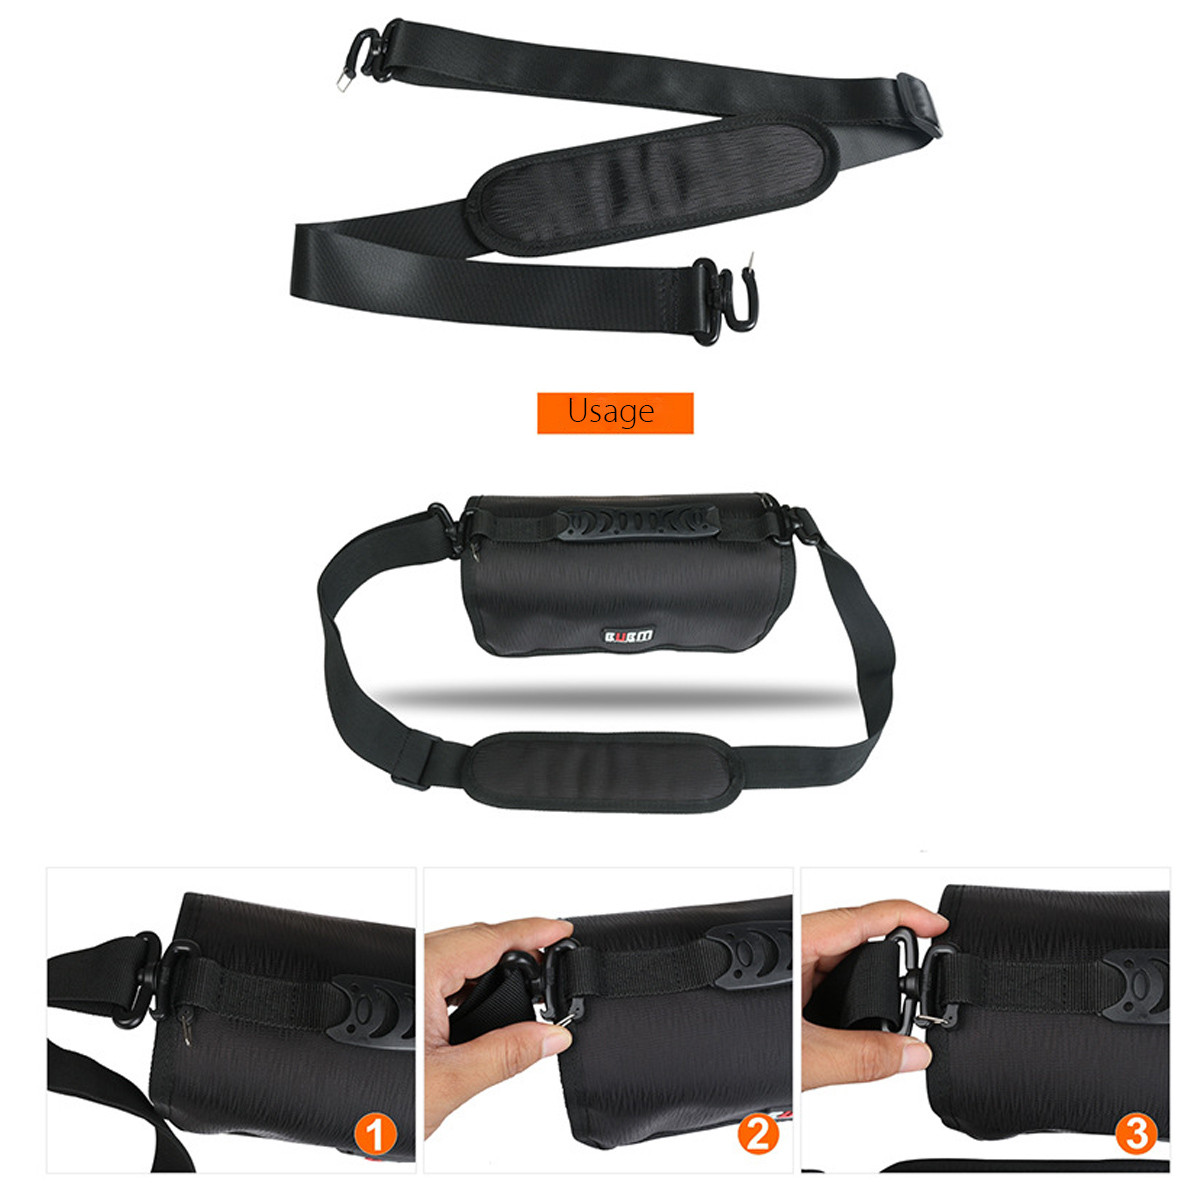 BUBM Waterproof Storage Protective Case Roll Camera Bag for GoPro Hero 4 3 Plus 3 SJcam